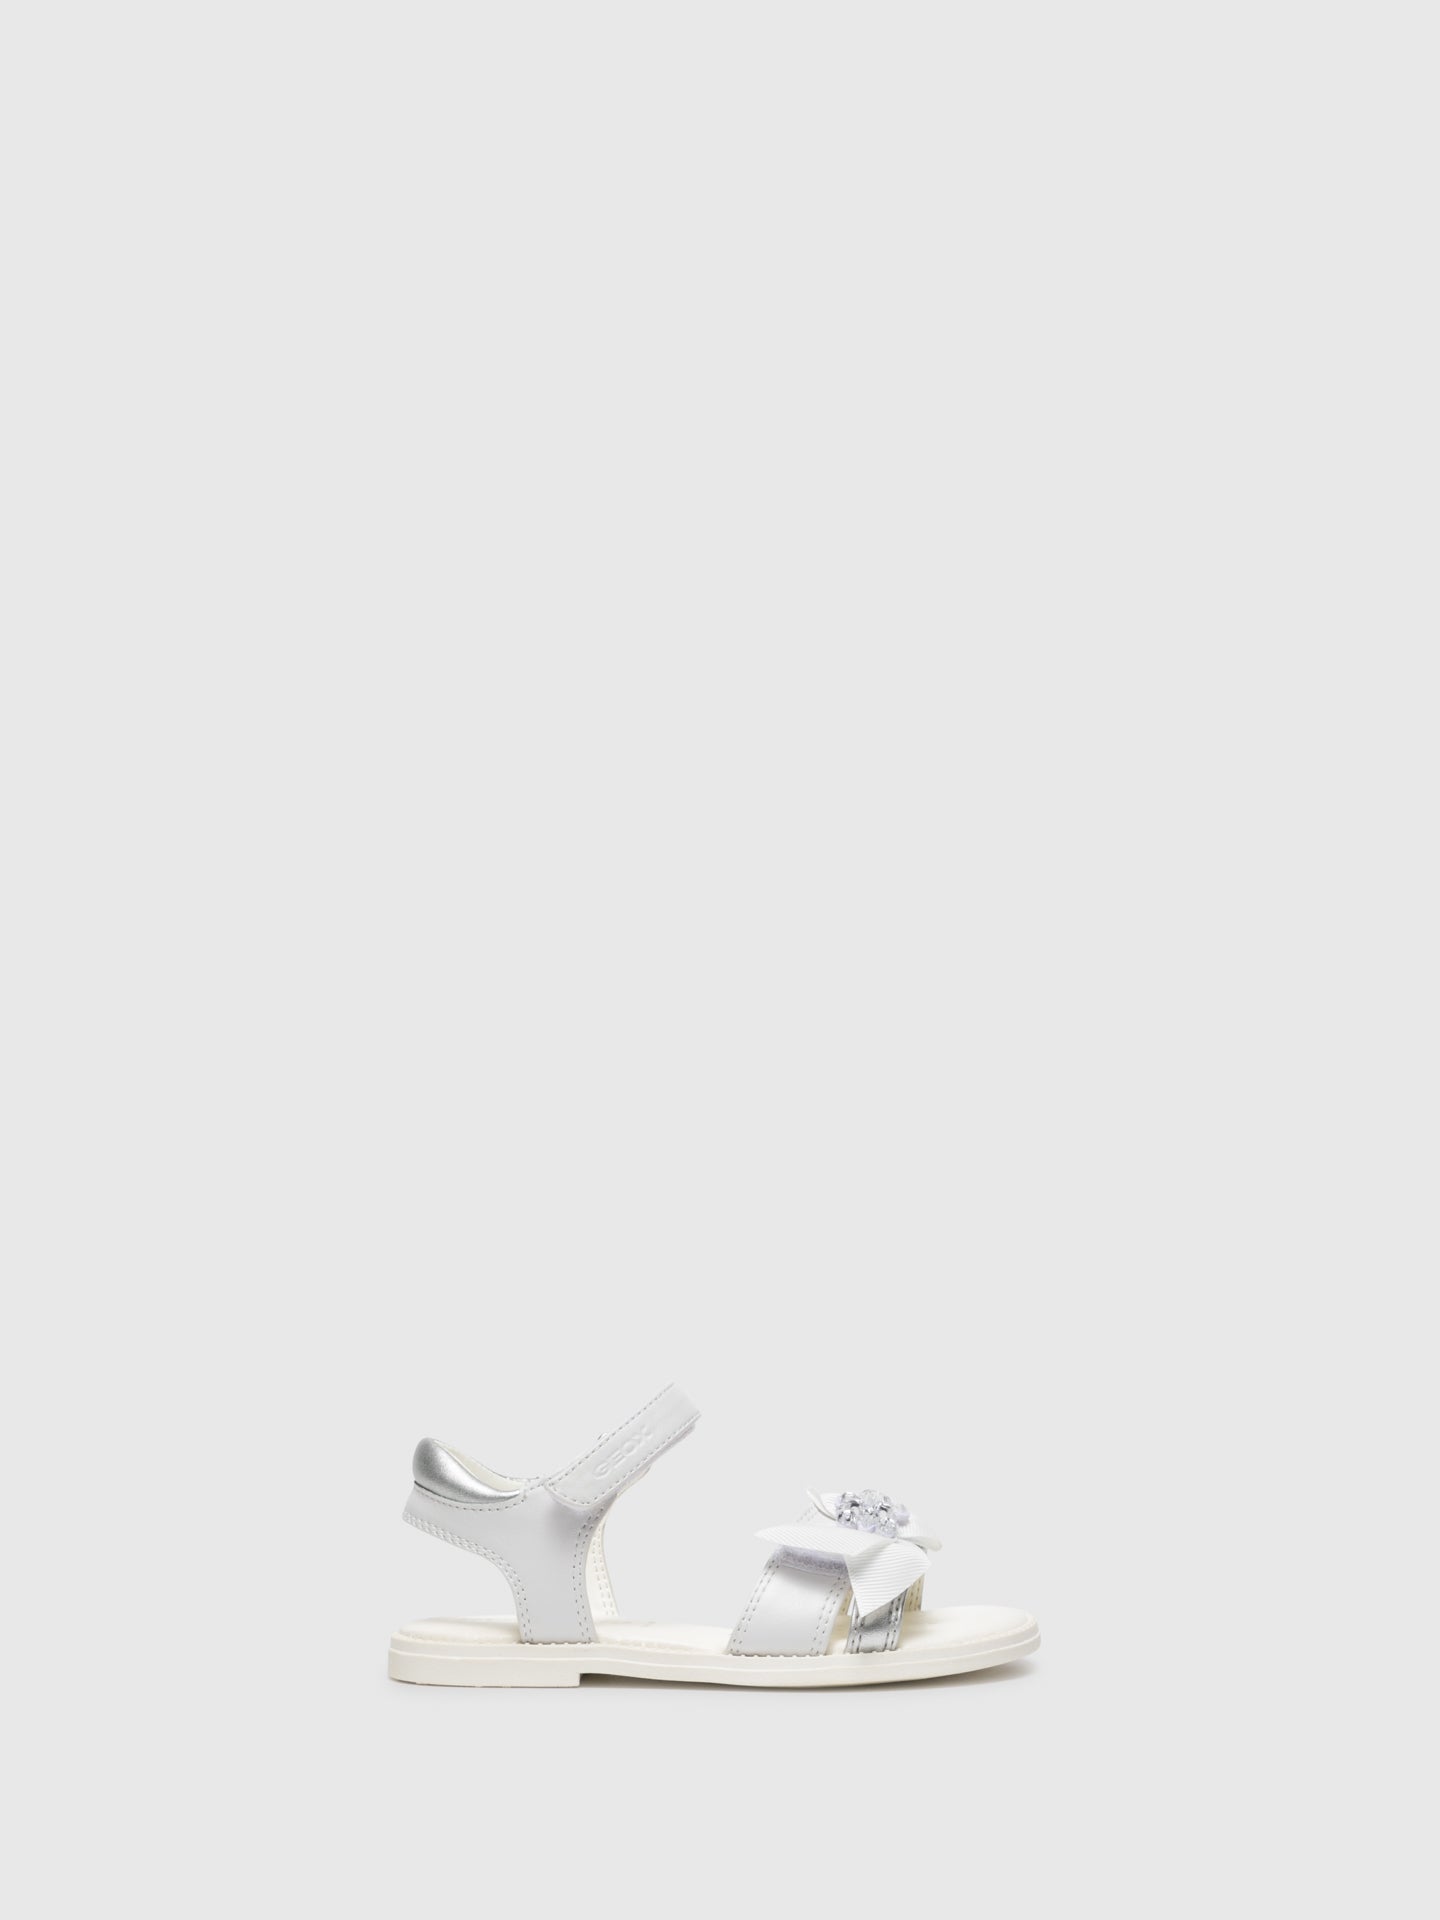 Geox White Appliqués Sandals